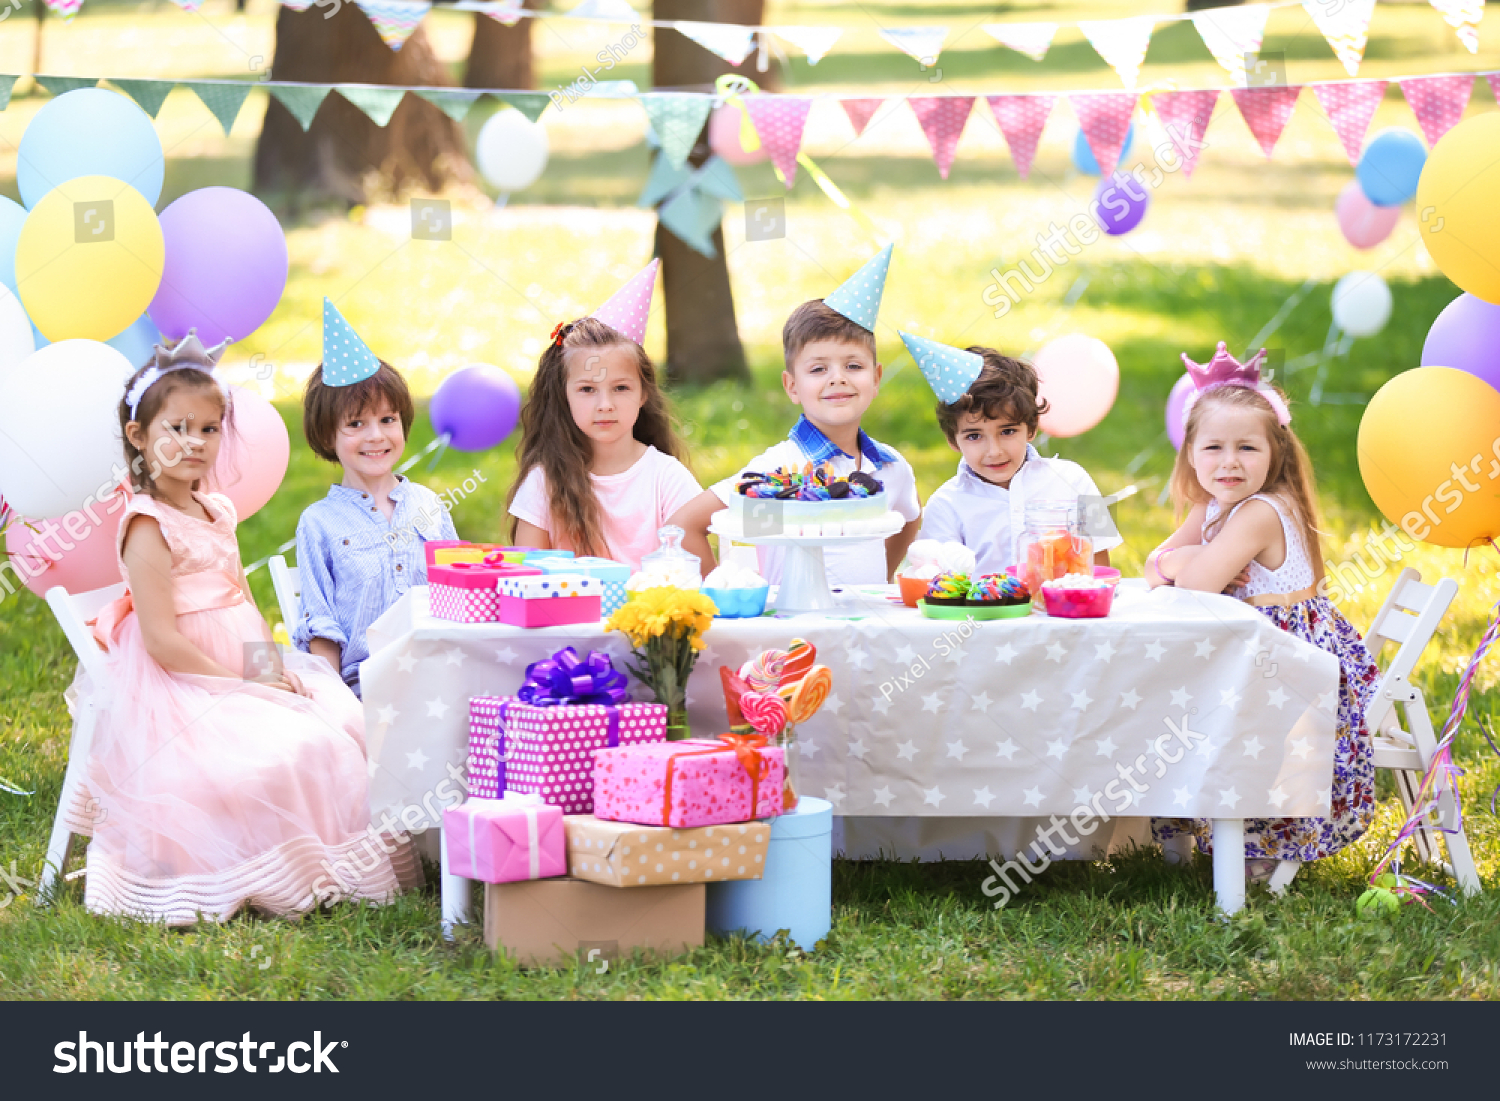 Cute children celebrating birthday outdoors #1173172231